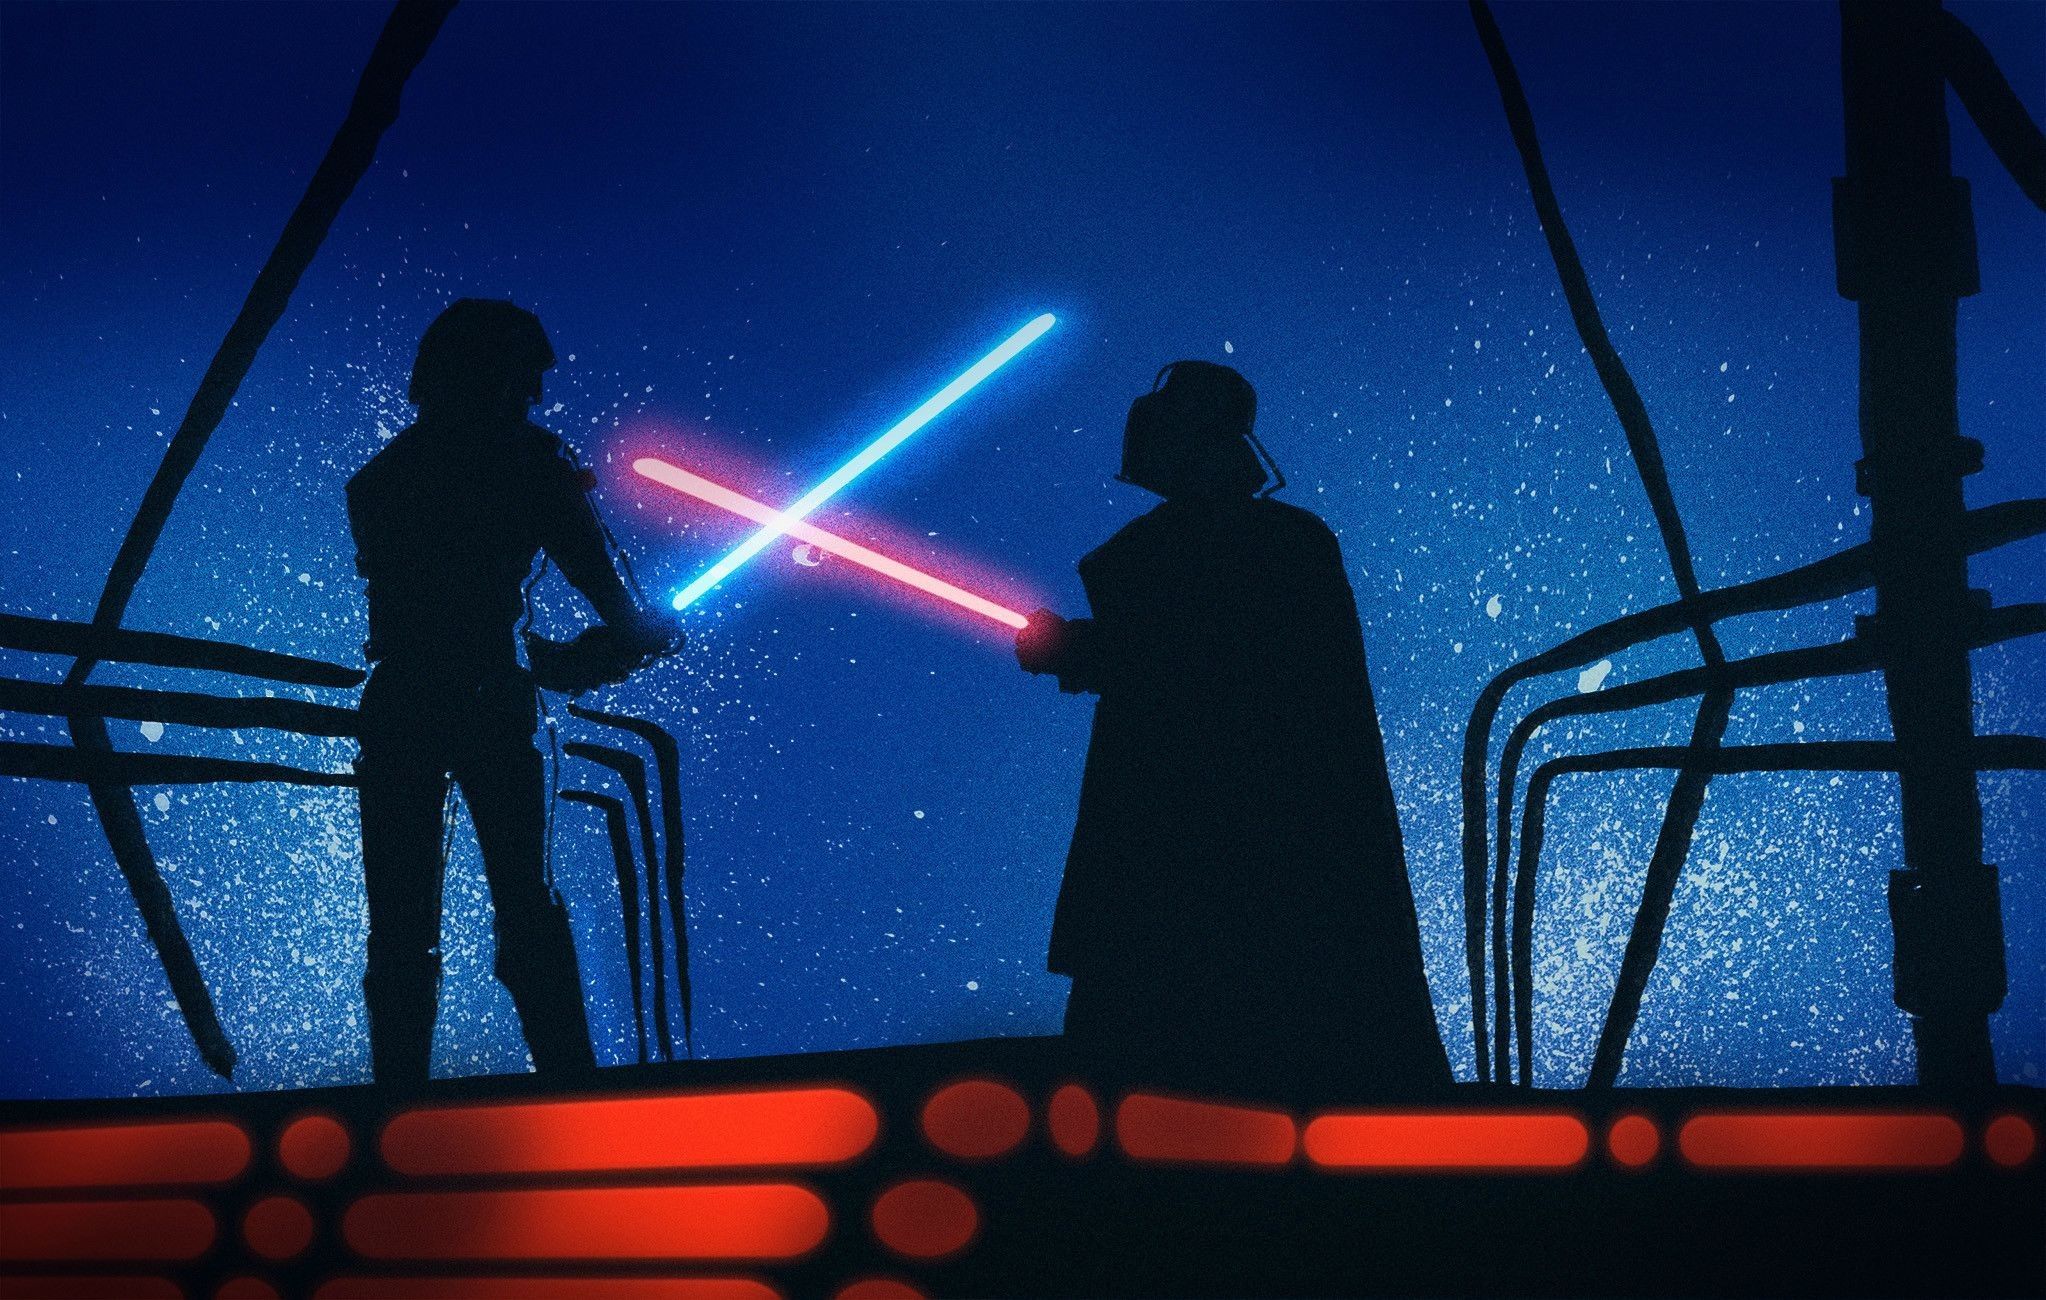 Star Wars Luke Skywalker Darth Vader Anakin Skywalker Star Wars Episode V The Empire Strikes Back Bl Wallpaper:2046x1300